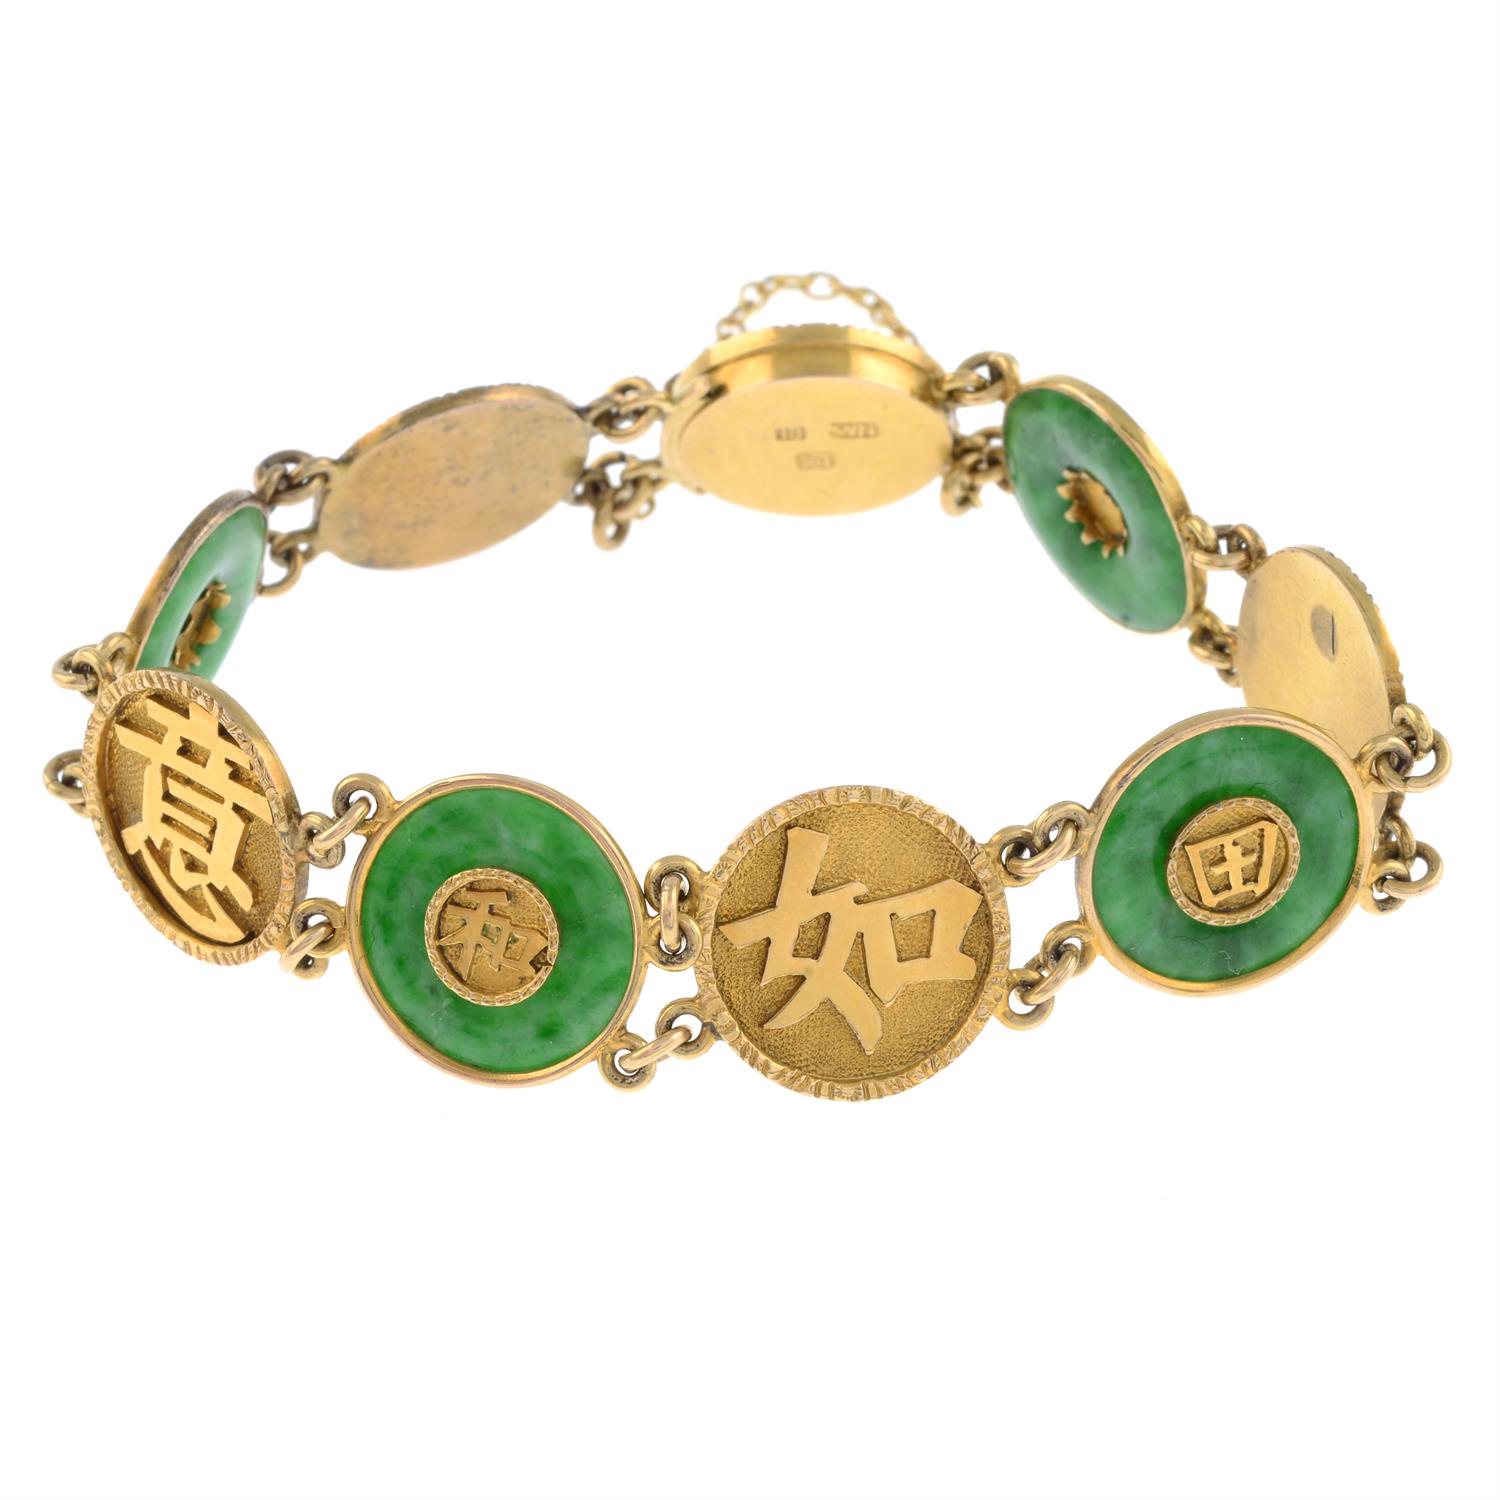 Jade bracelet